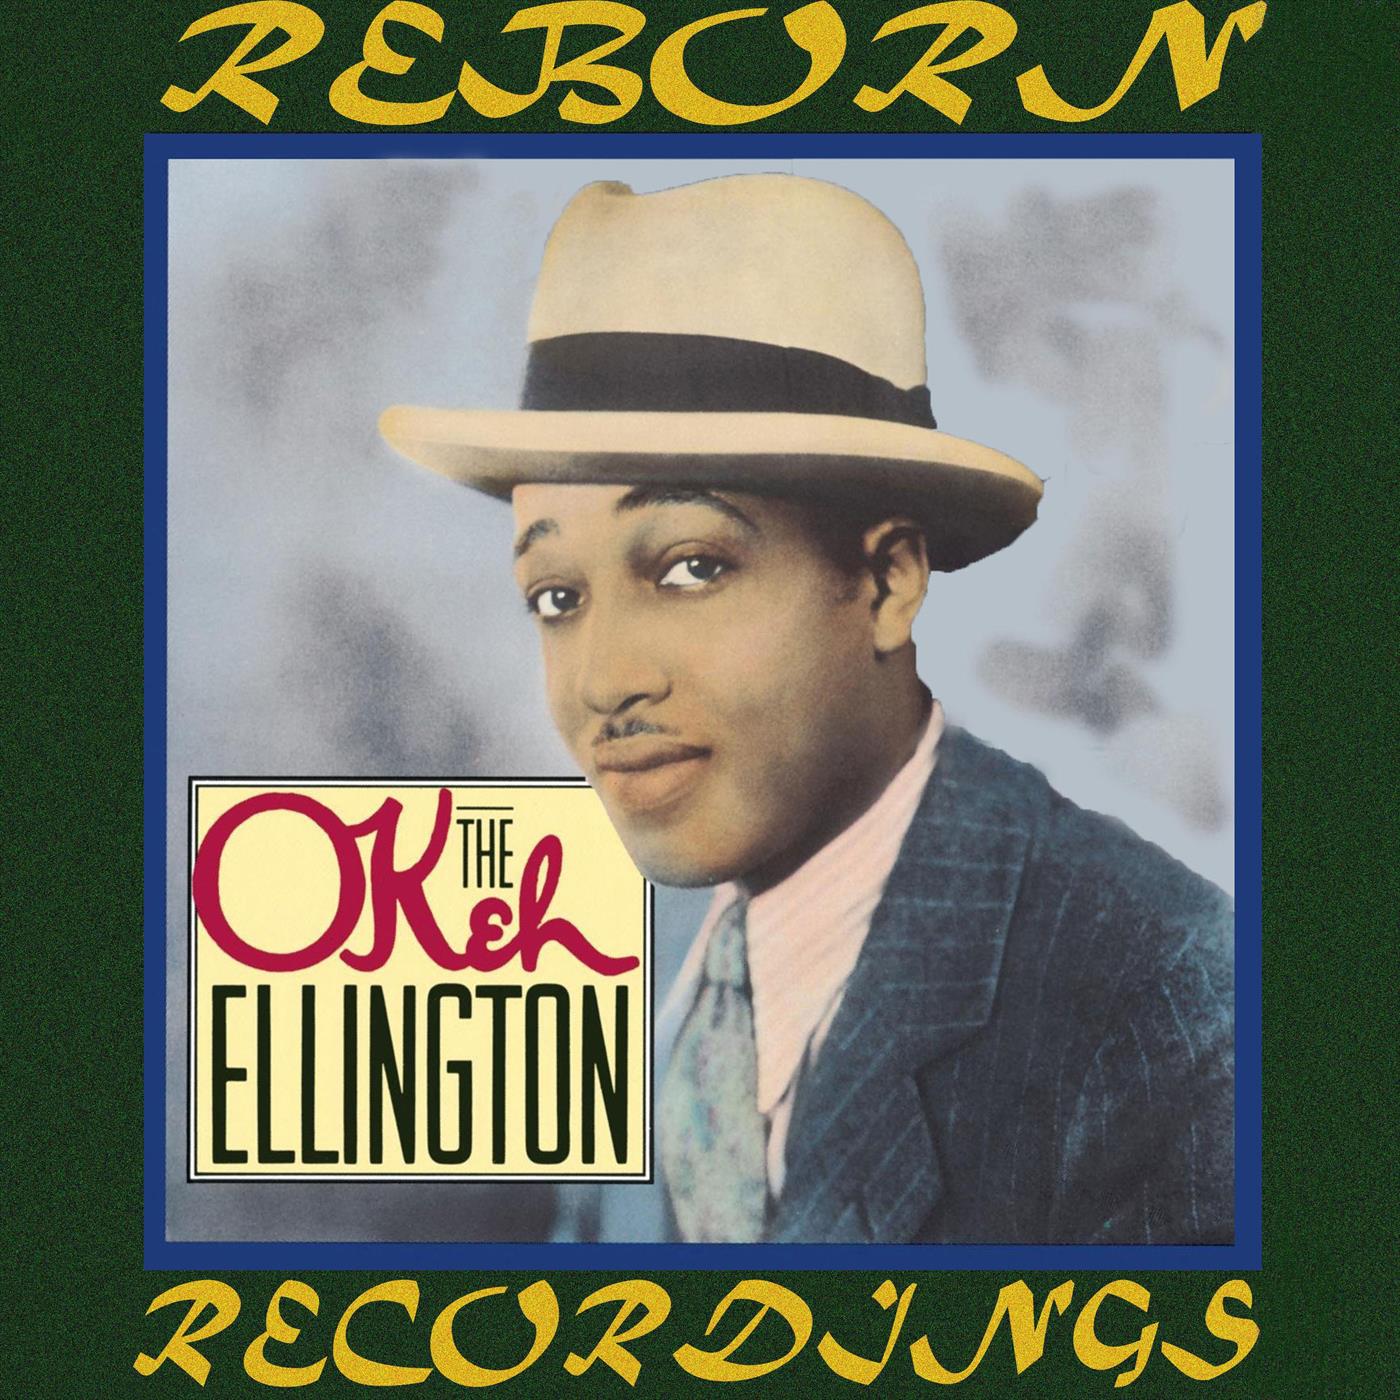 The Okeh Ellington (HD Remastered)